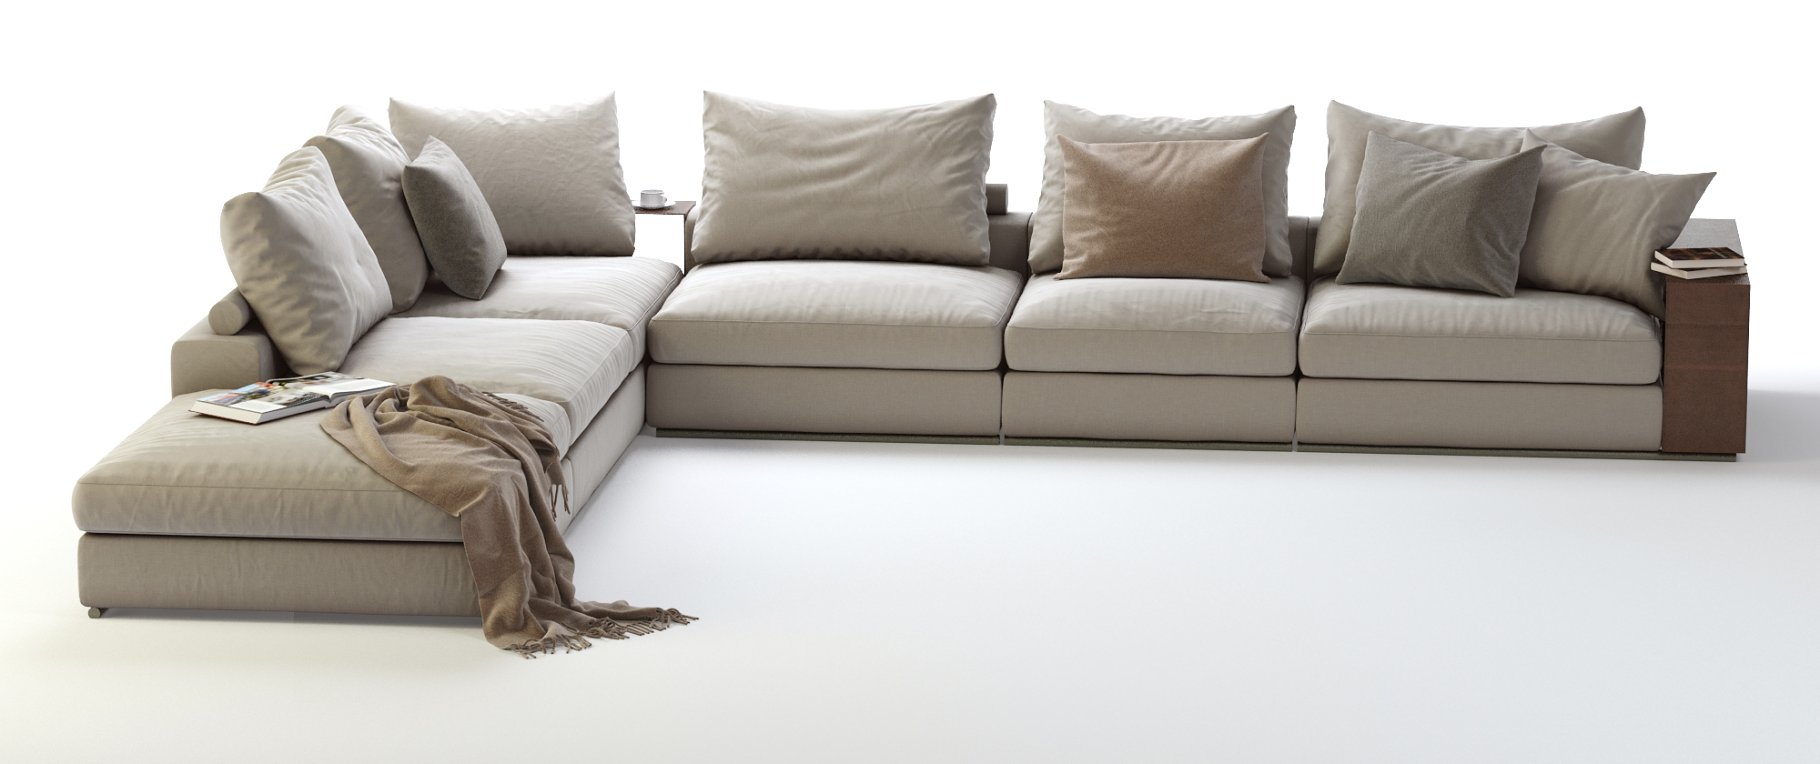 Images of an elegant 3d model of a corner sectional sofa